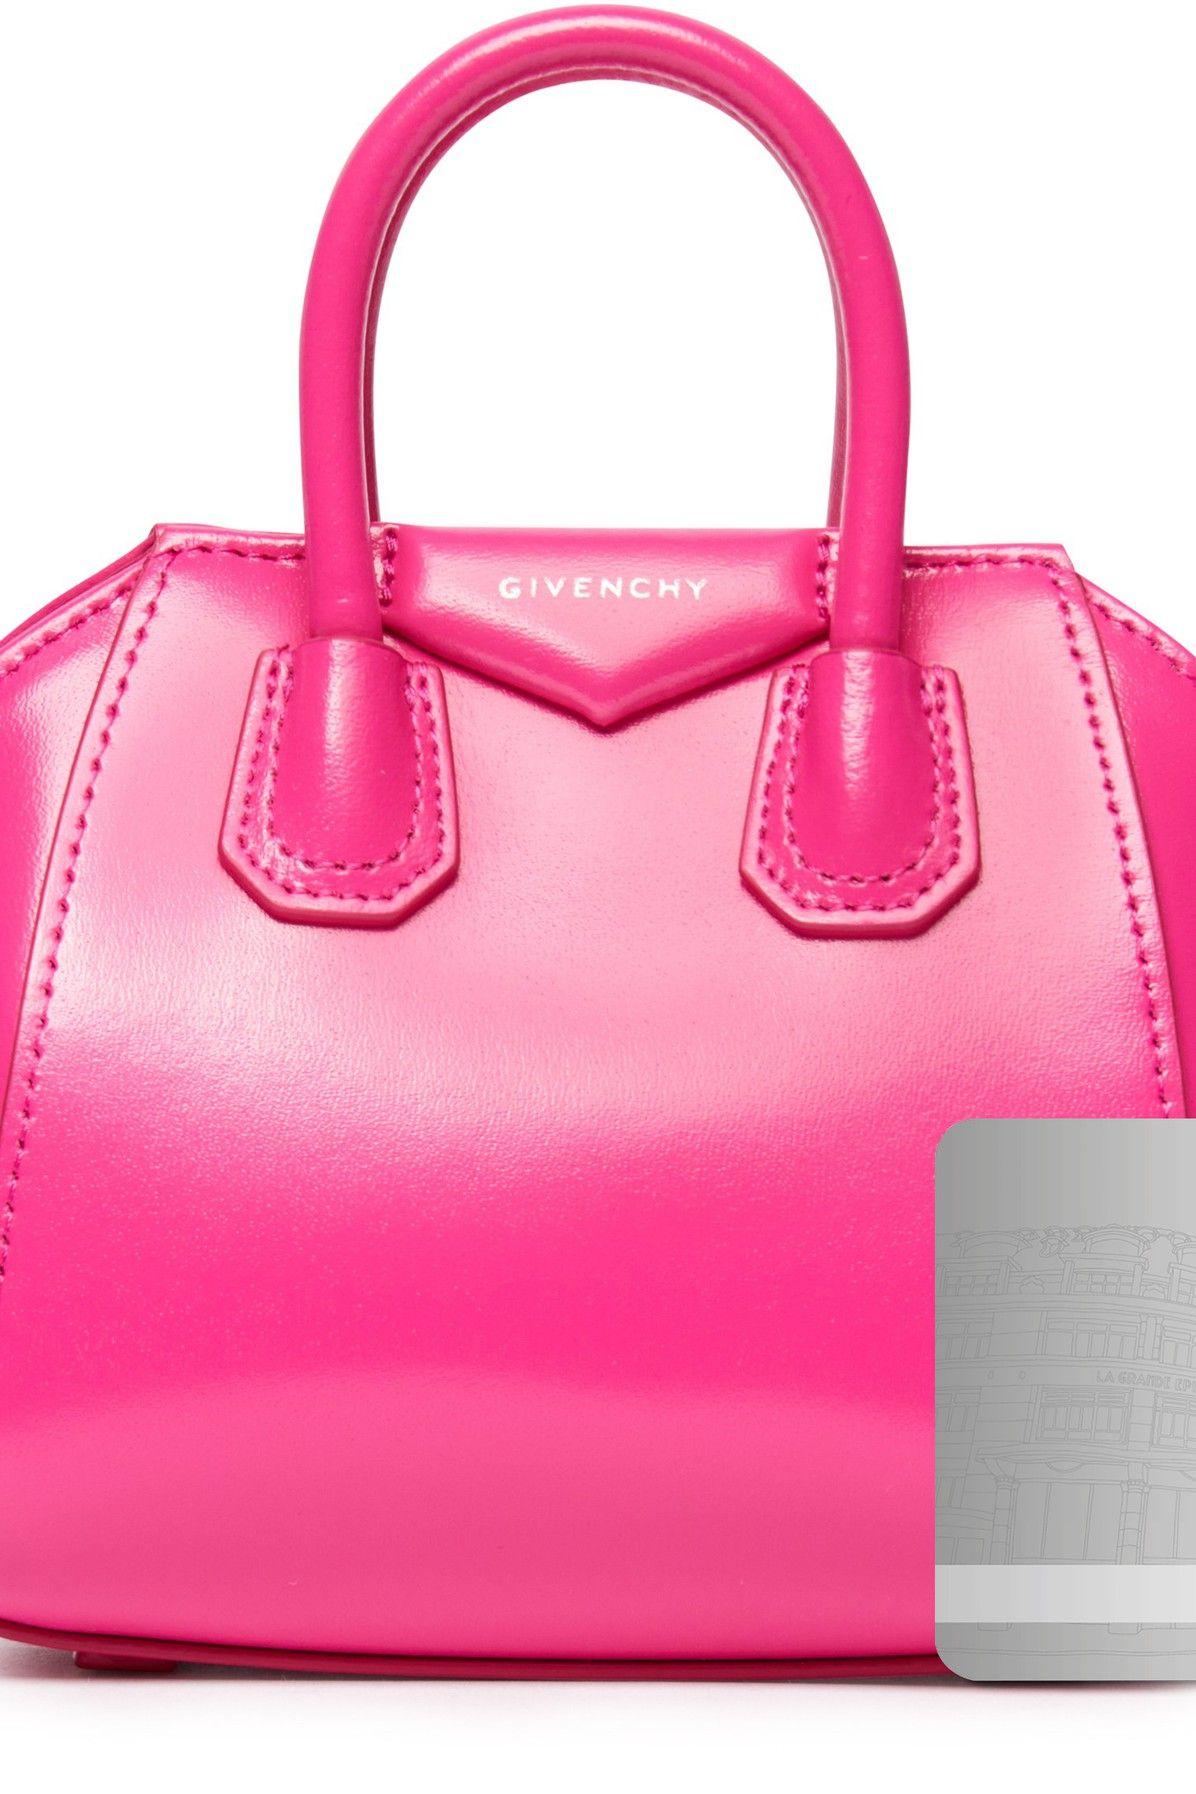 Givenchy Antigona Micro Bag in Pink